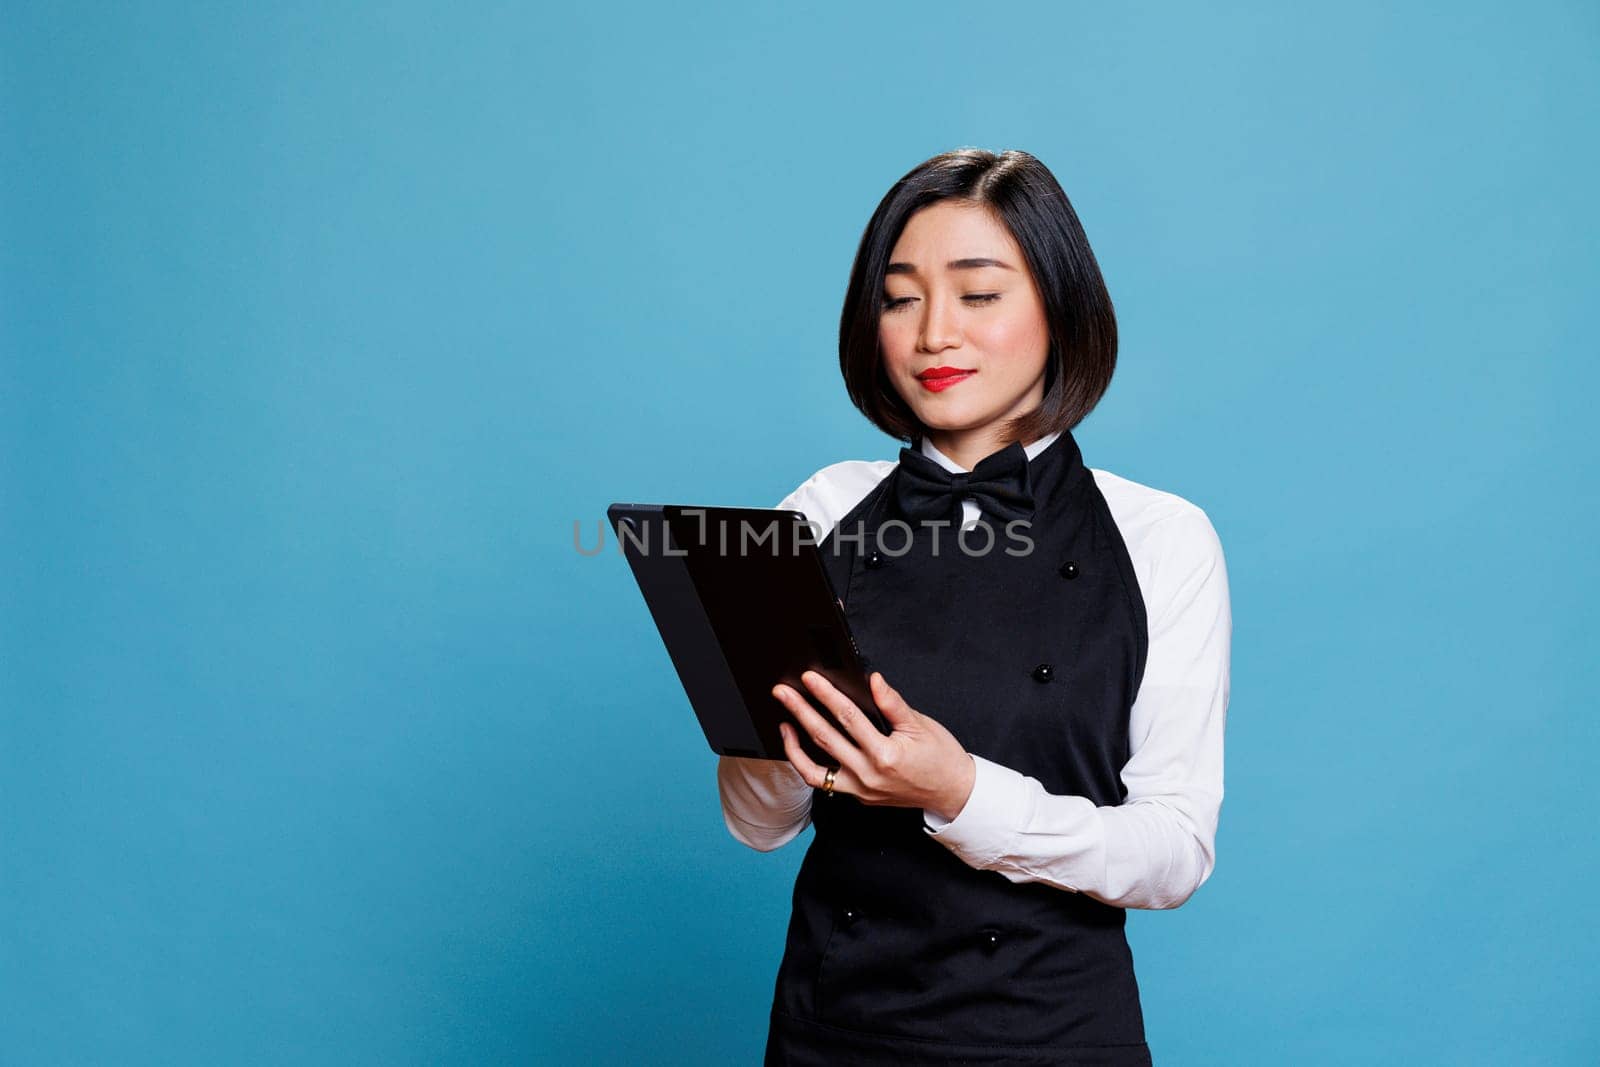 Restaurant waitress using digital tablet by DCStudio